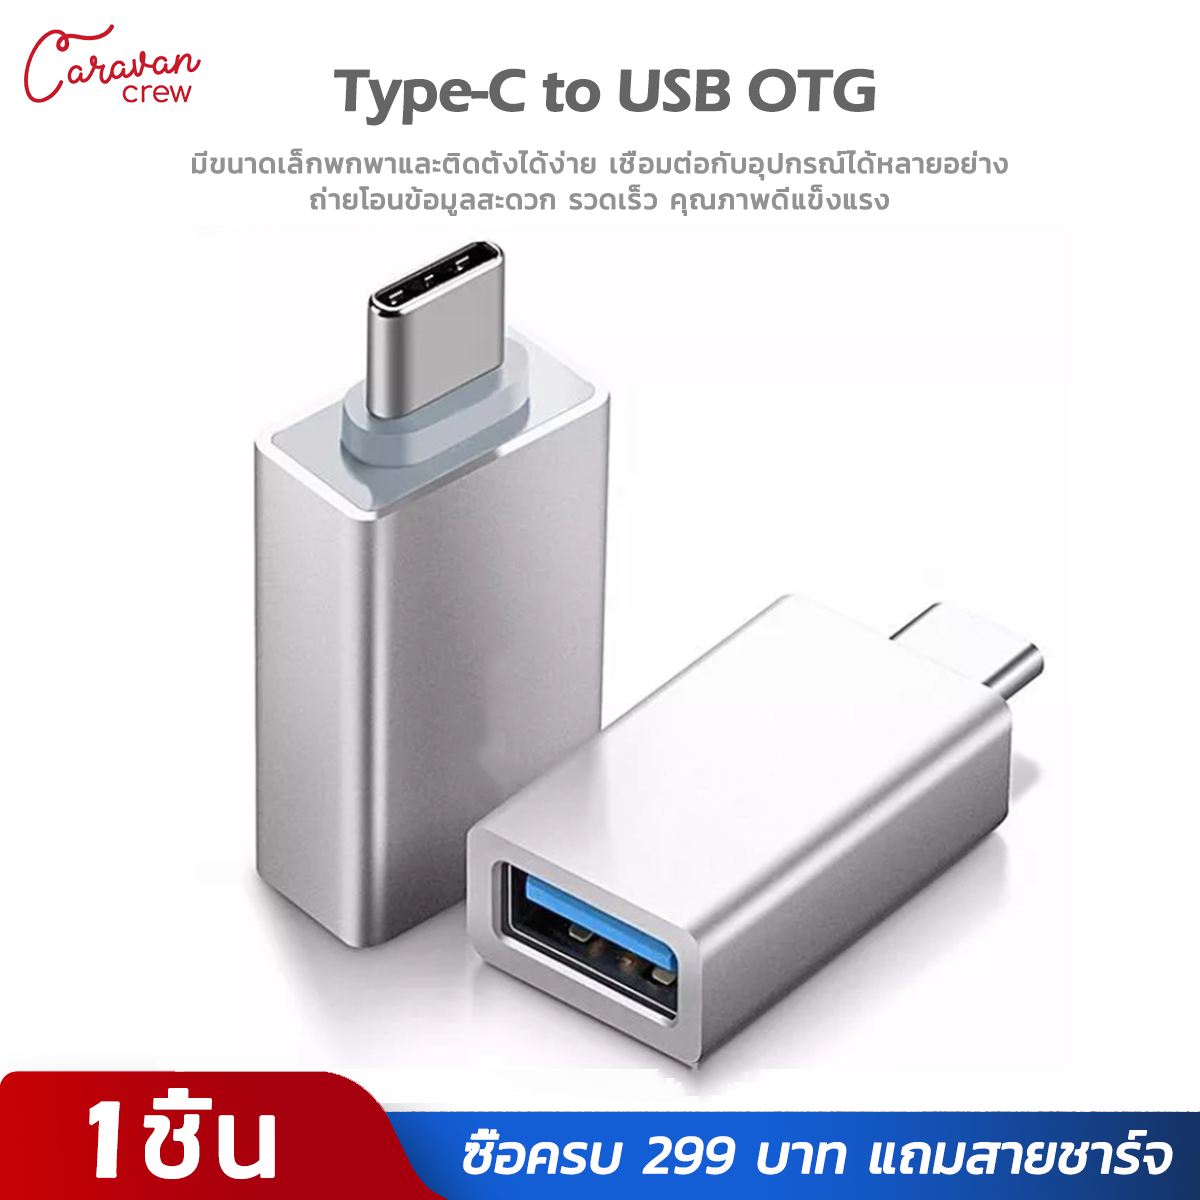 Type-C OTG USB Caravan Crew USB 3.0 ถูกและดี ส่งไว แพ็คเกจสวย มีประกัน ใช้ไม่ได้คืนเงินทุกกรณี Metal USB-C Type C Male to USB Female OTG Sync Charging Adapter Connector